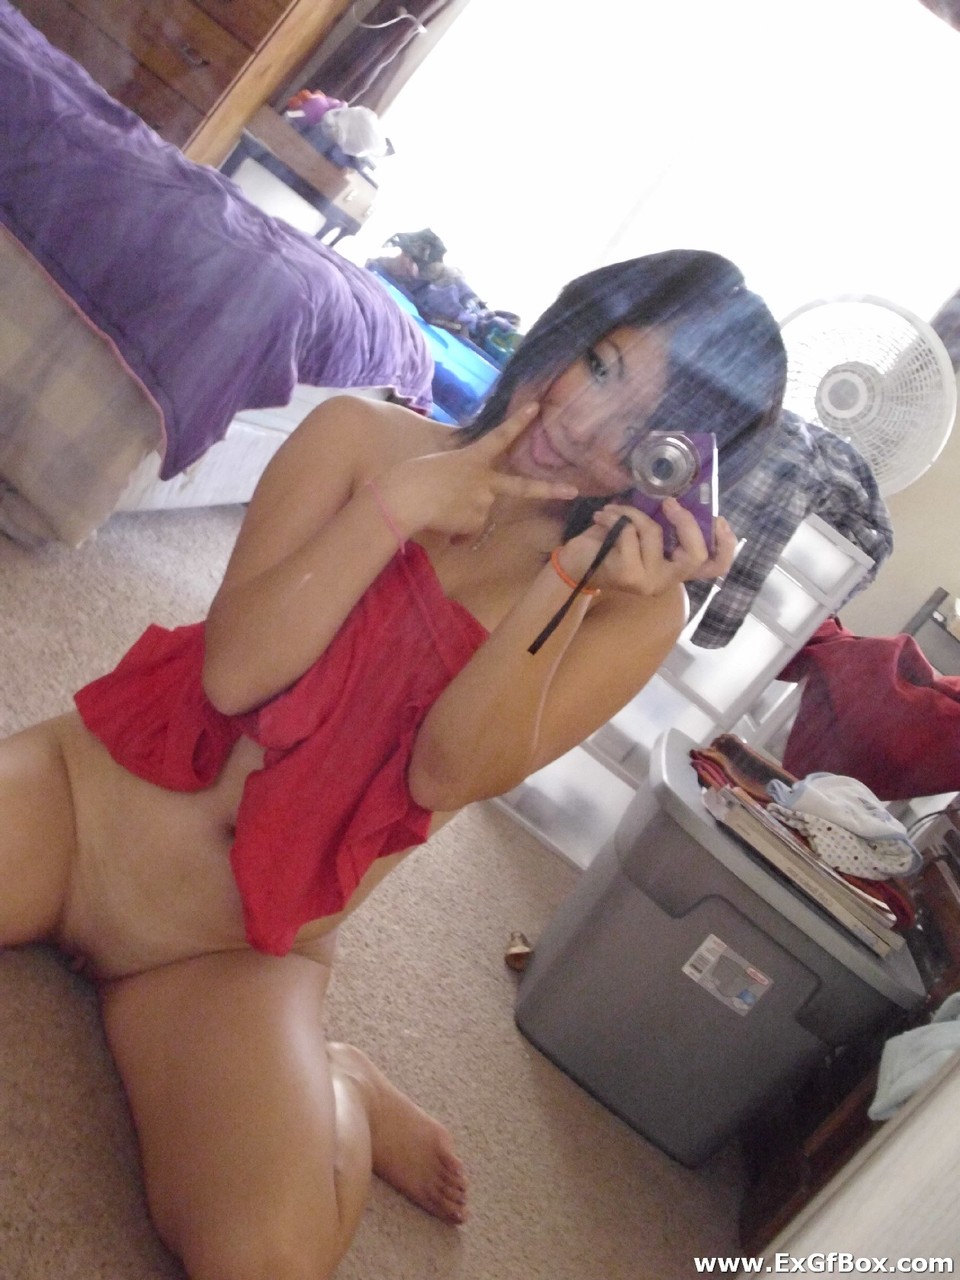 Bootylicious teenage girlfriend takes selfies of her hot body while stripping порно фото #426010469 | Ex GF Box Pics, Selfie, мобильное порно